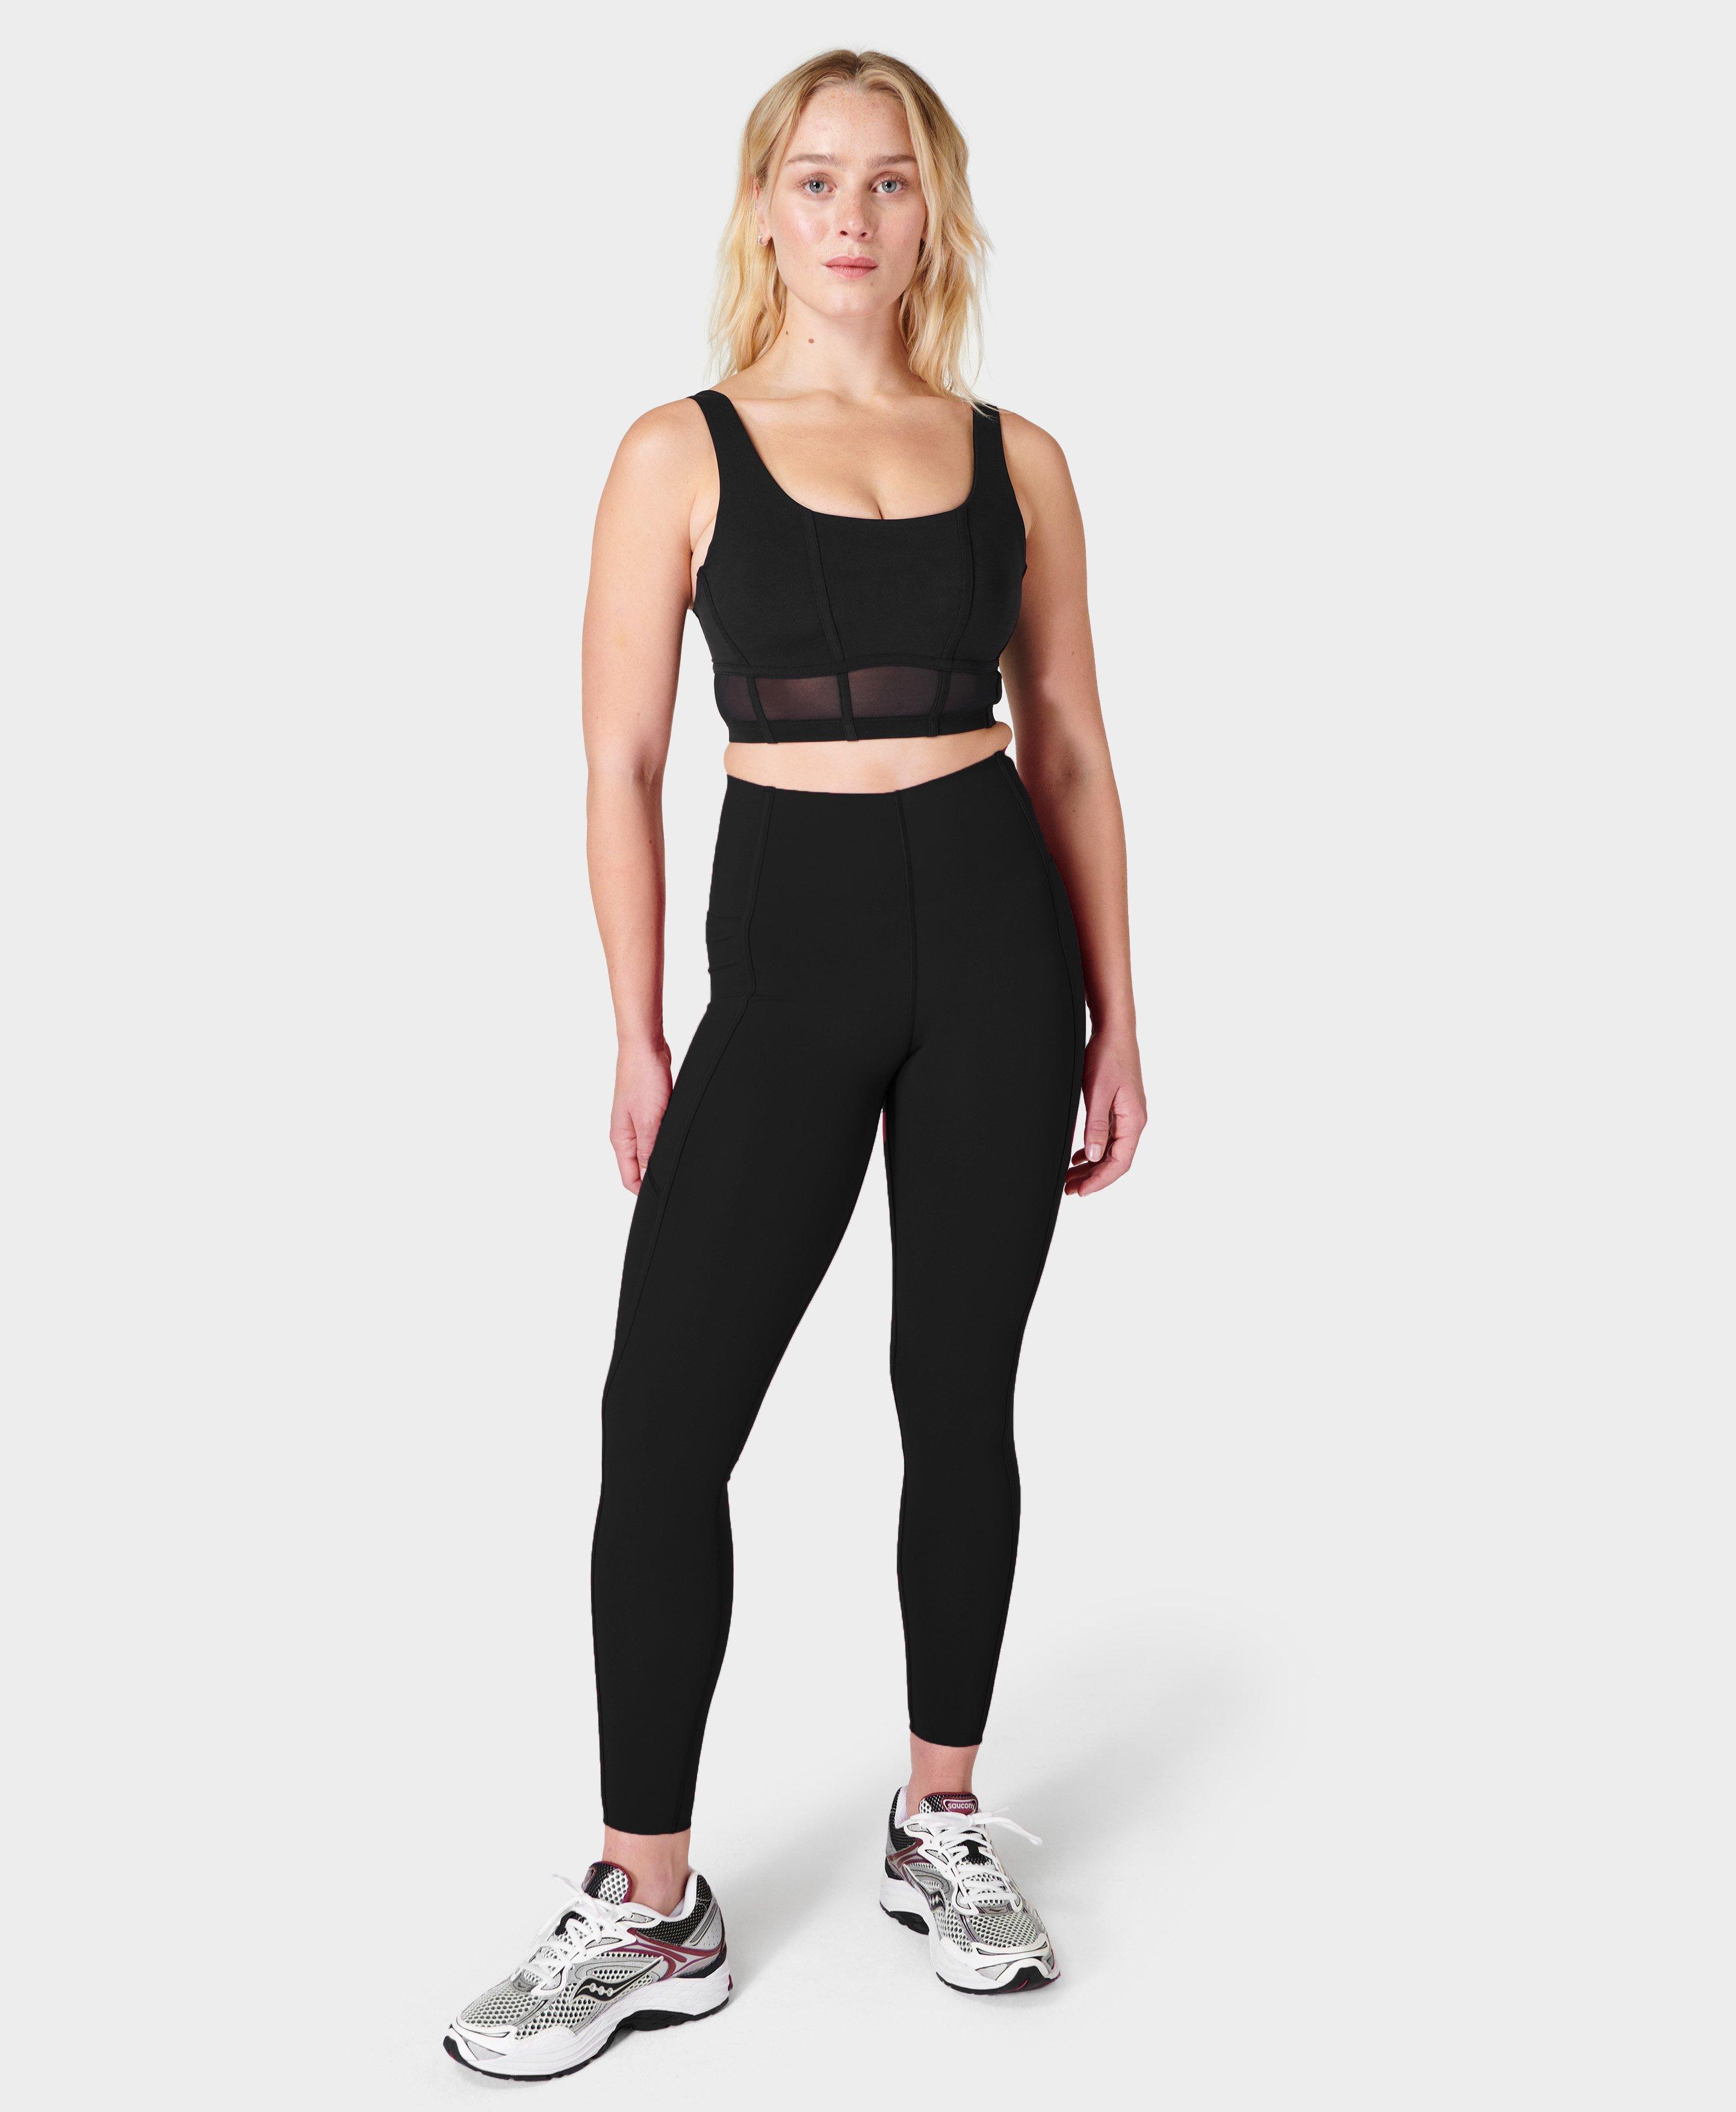  DF Designed for Fitness Black Corset Jumpsuits for